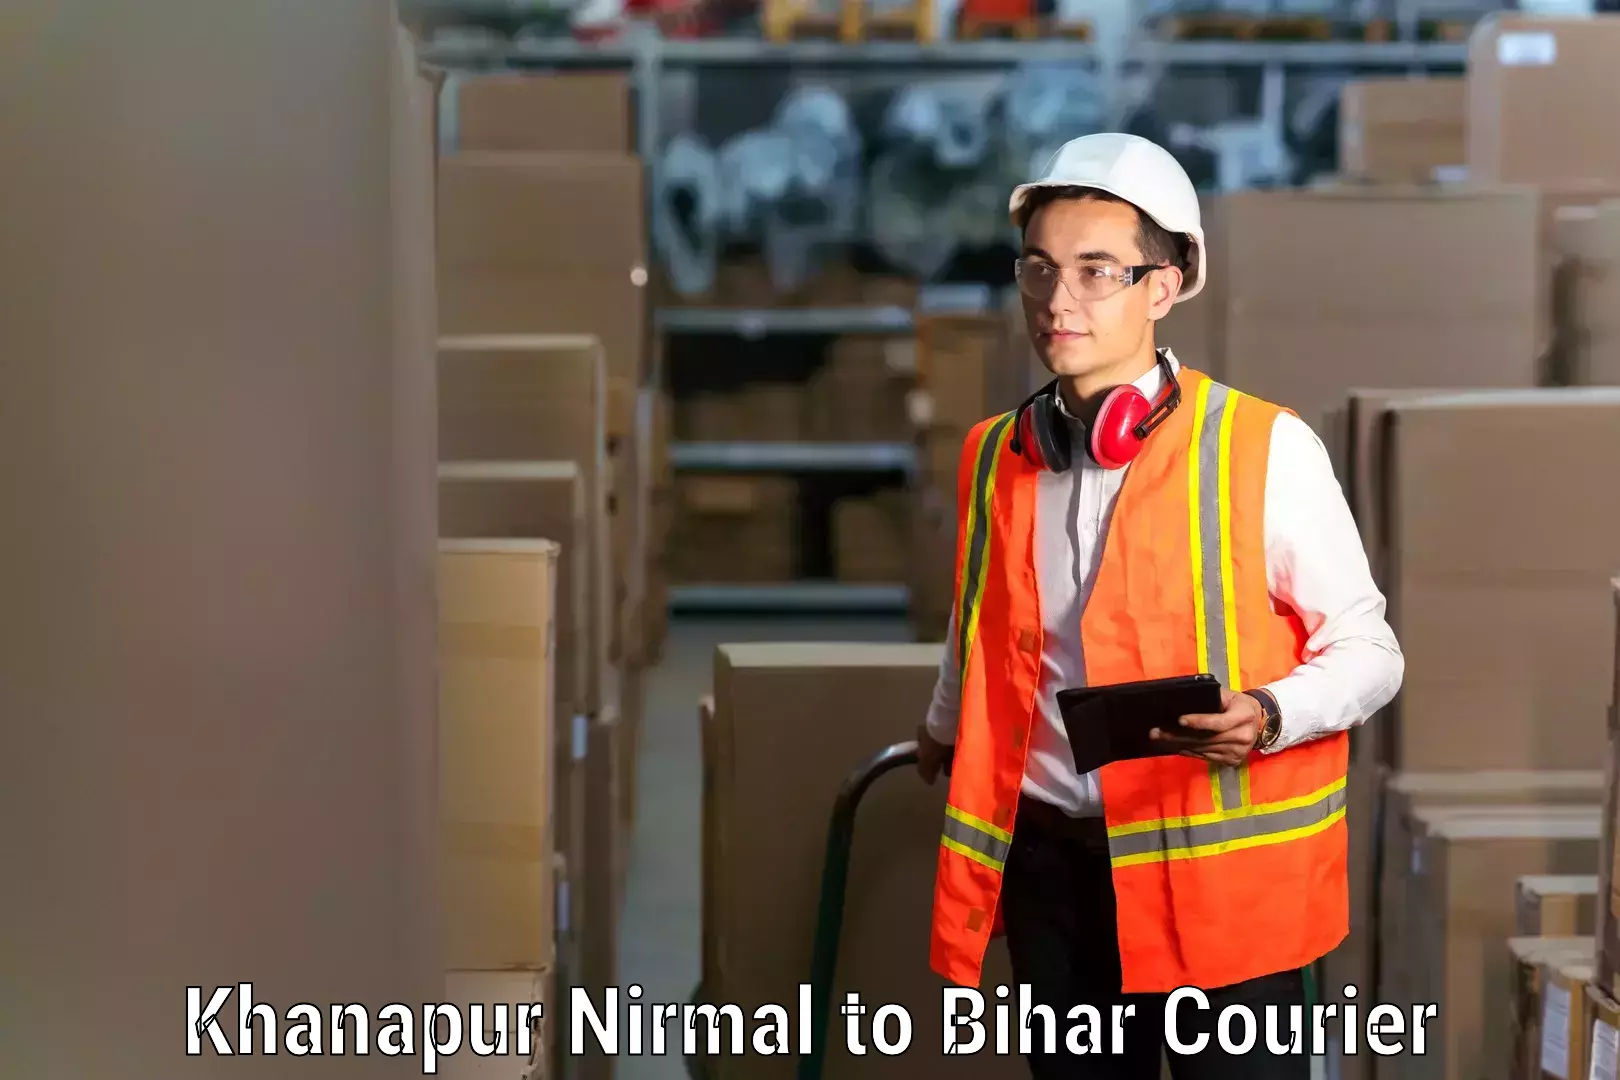 Furniture delivery service Khanapur Nirmal to Barauni